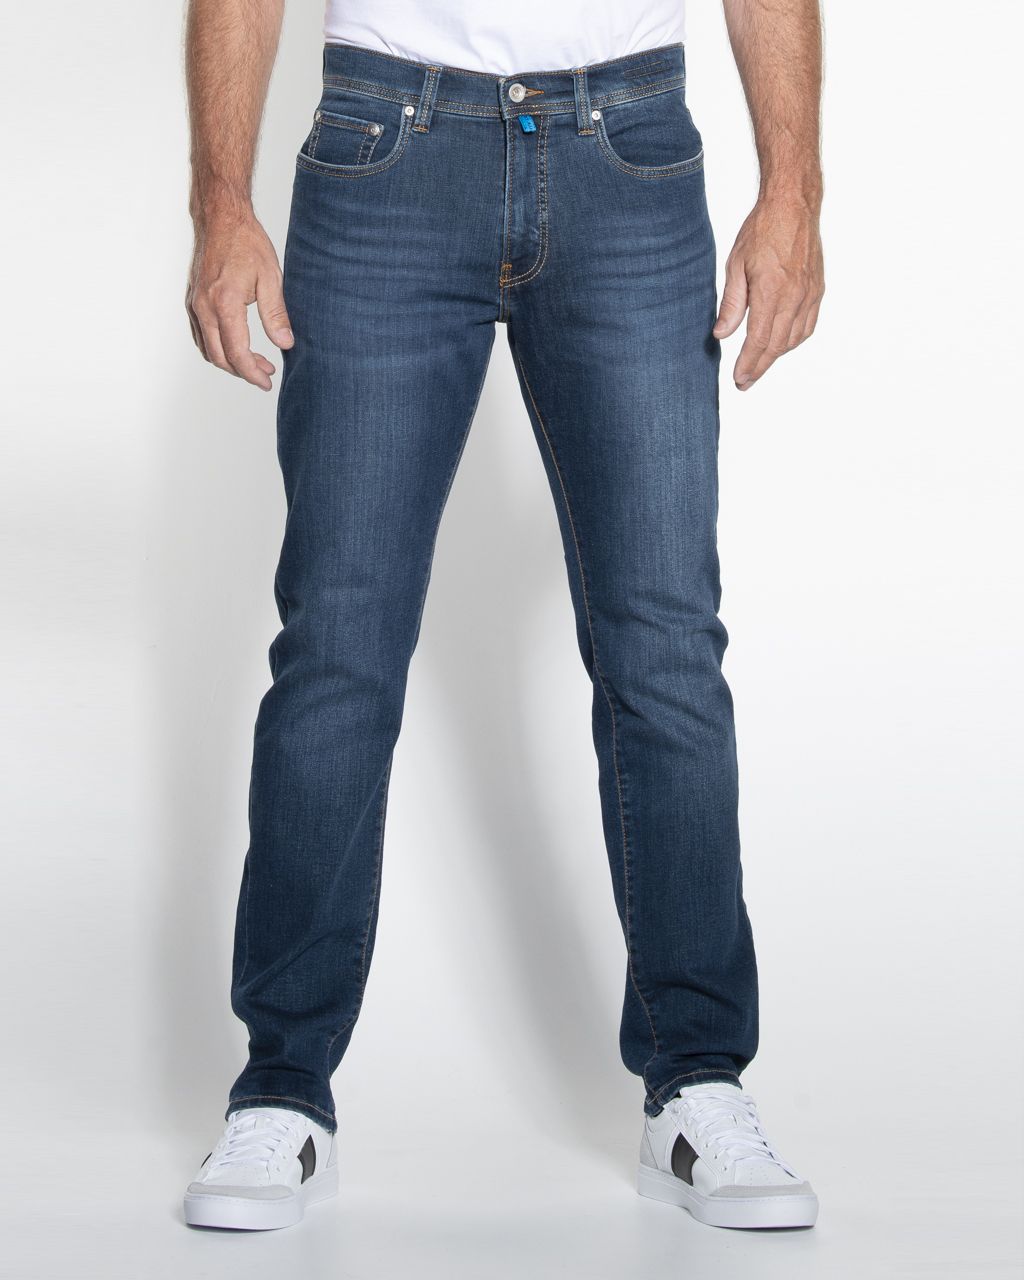 Pierre Cardin Lyon Future Flex Jeans | Shop nu - OFM.